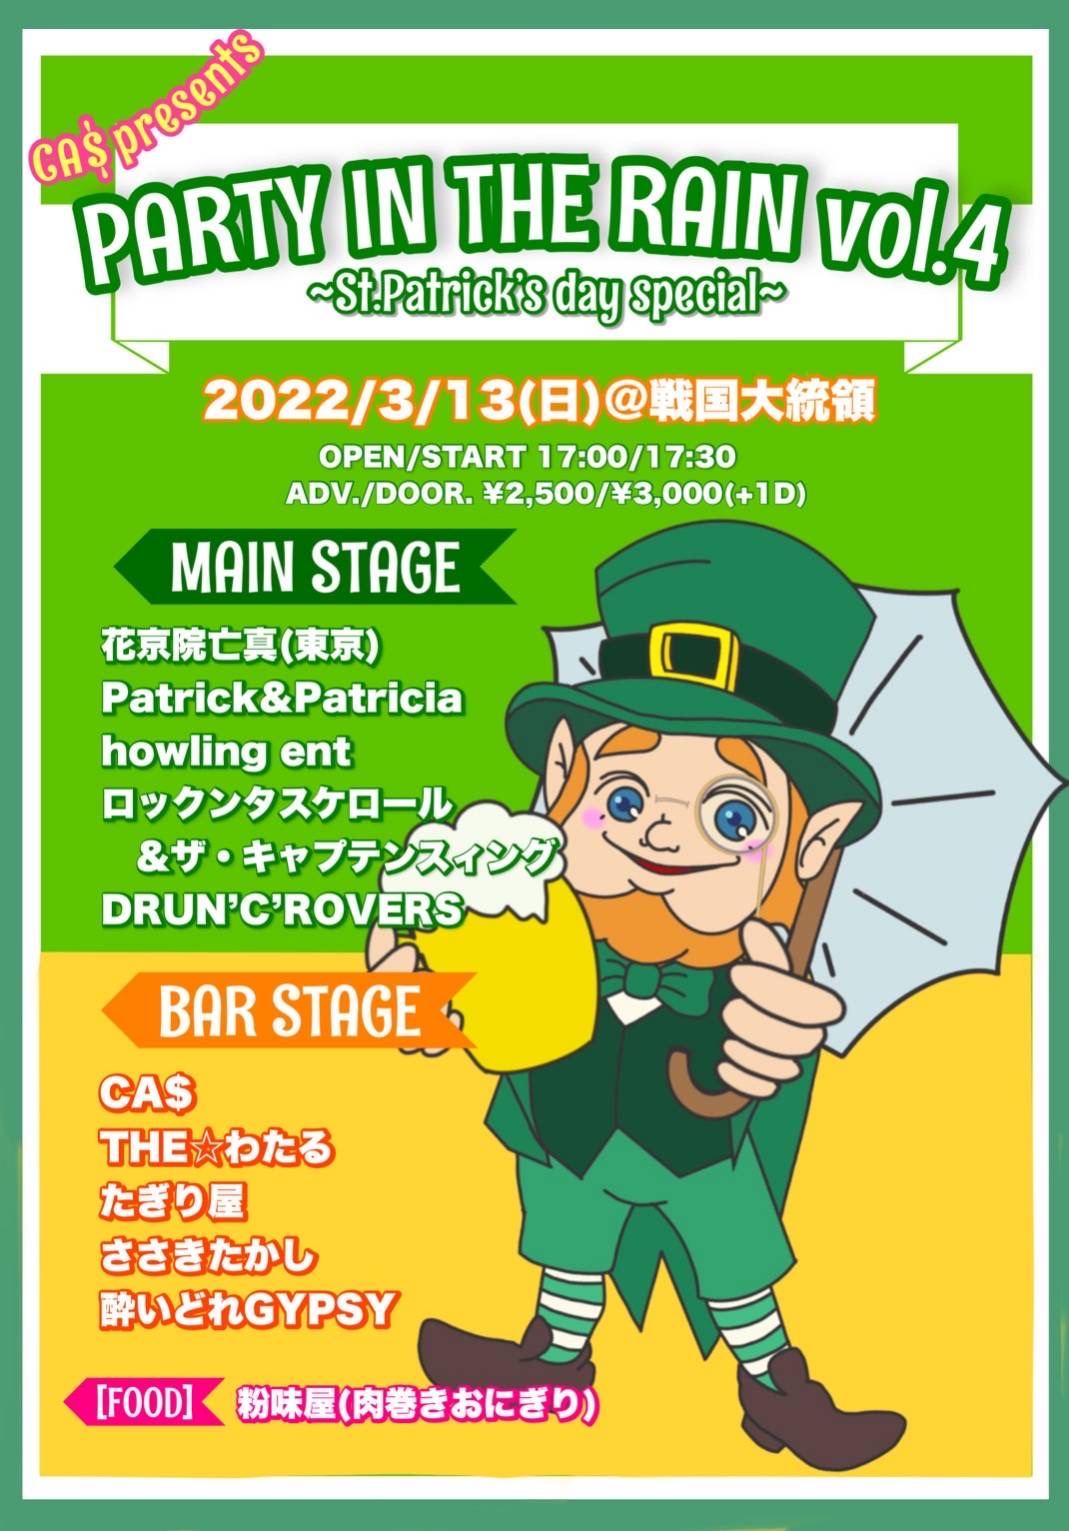 大阪・緑橋 戦国大統領 CA$企画「PARTY IN THE RAIN vol.4 〜St.Patrick's day special〜」